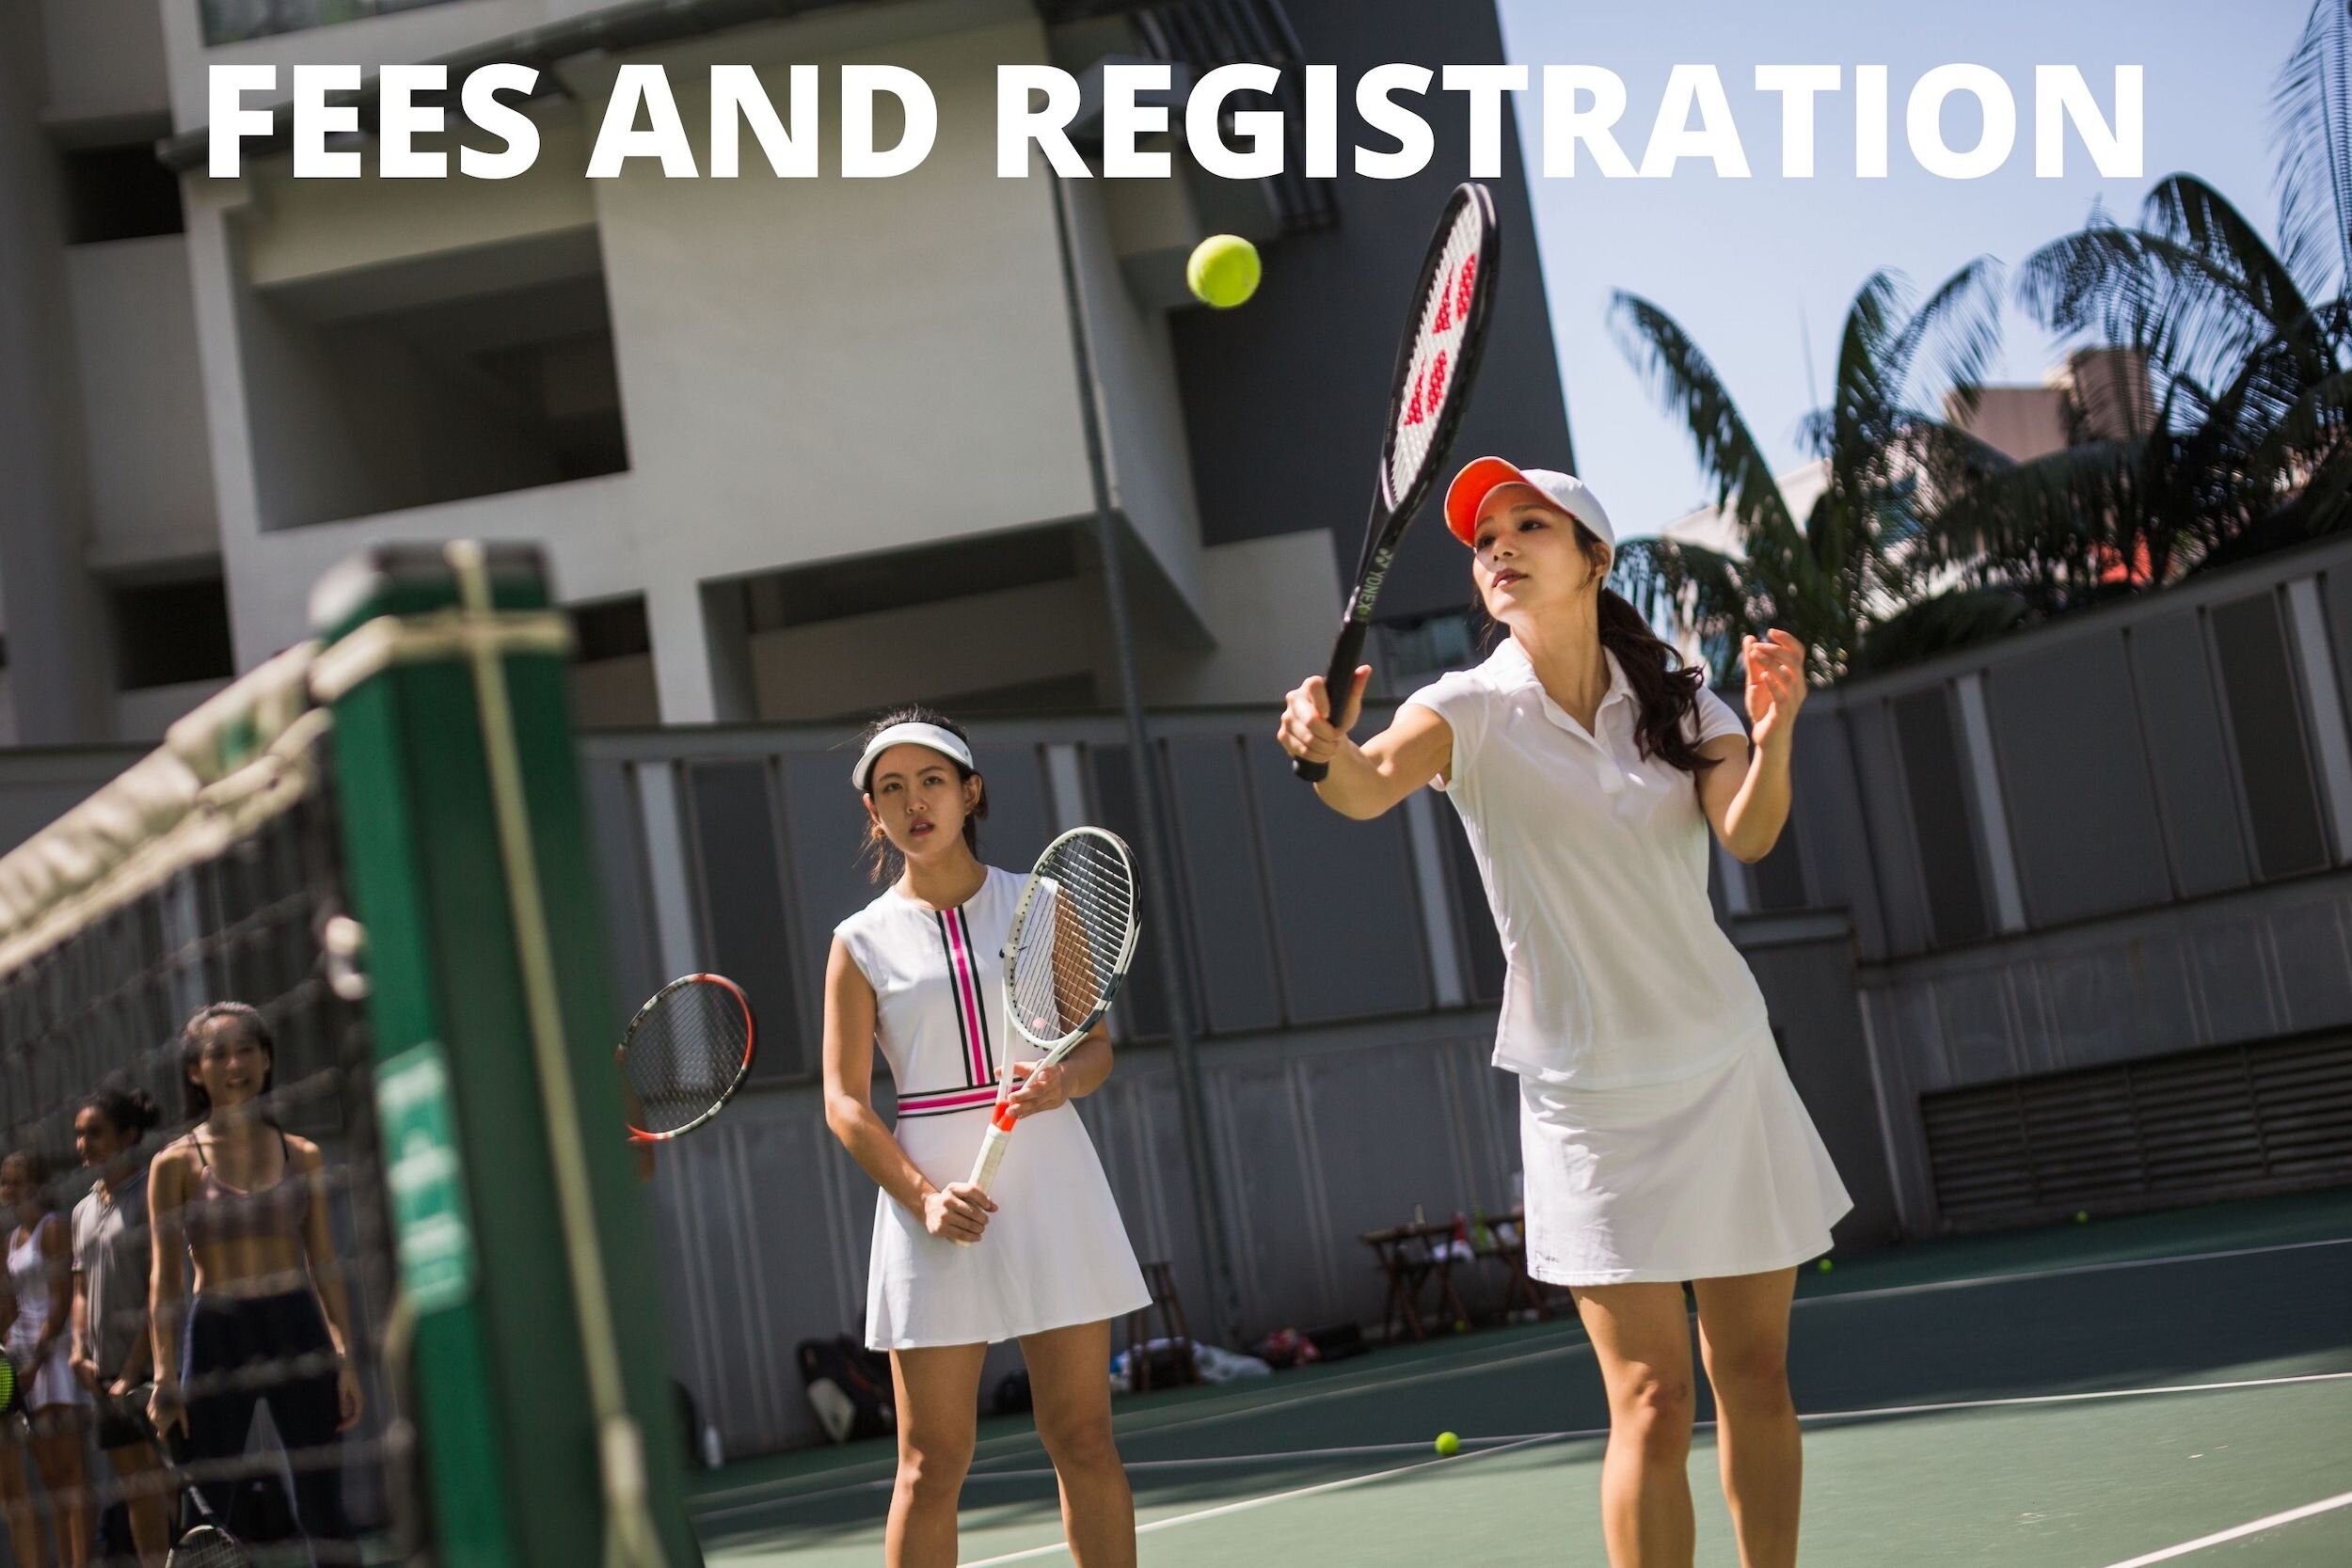 Tennis Lessons Singapore Price